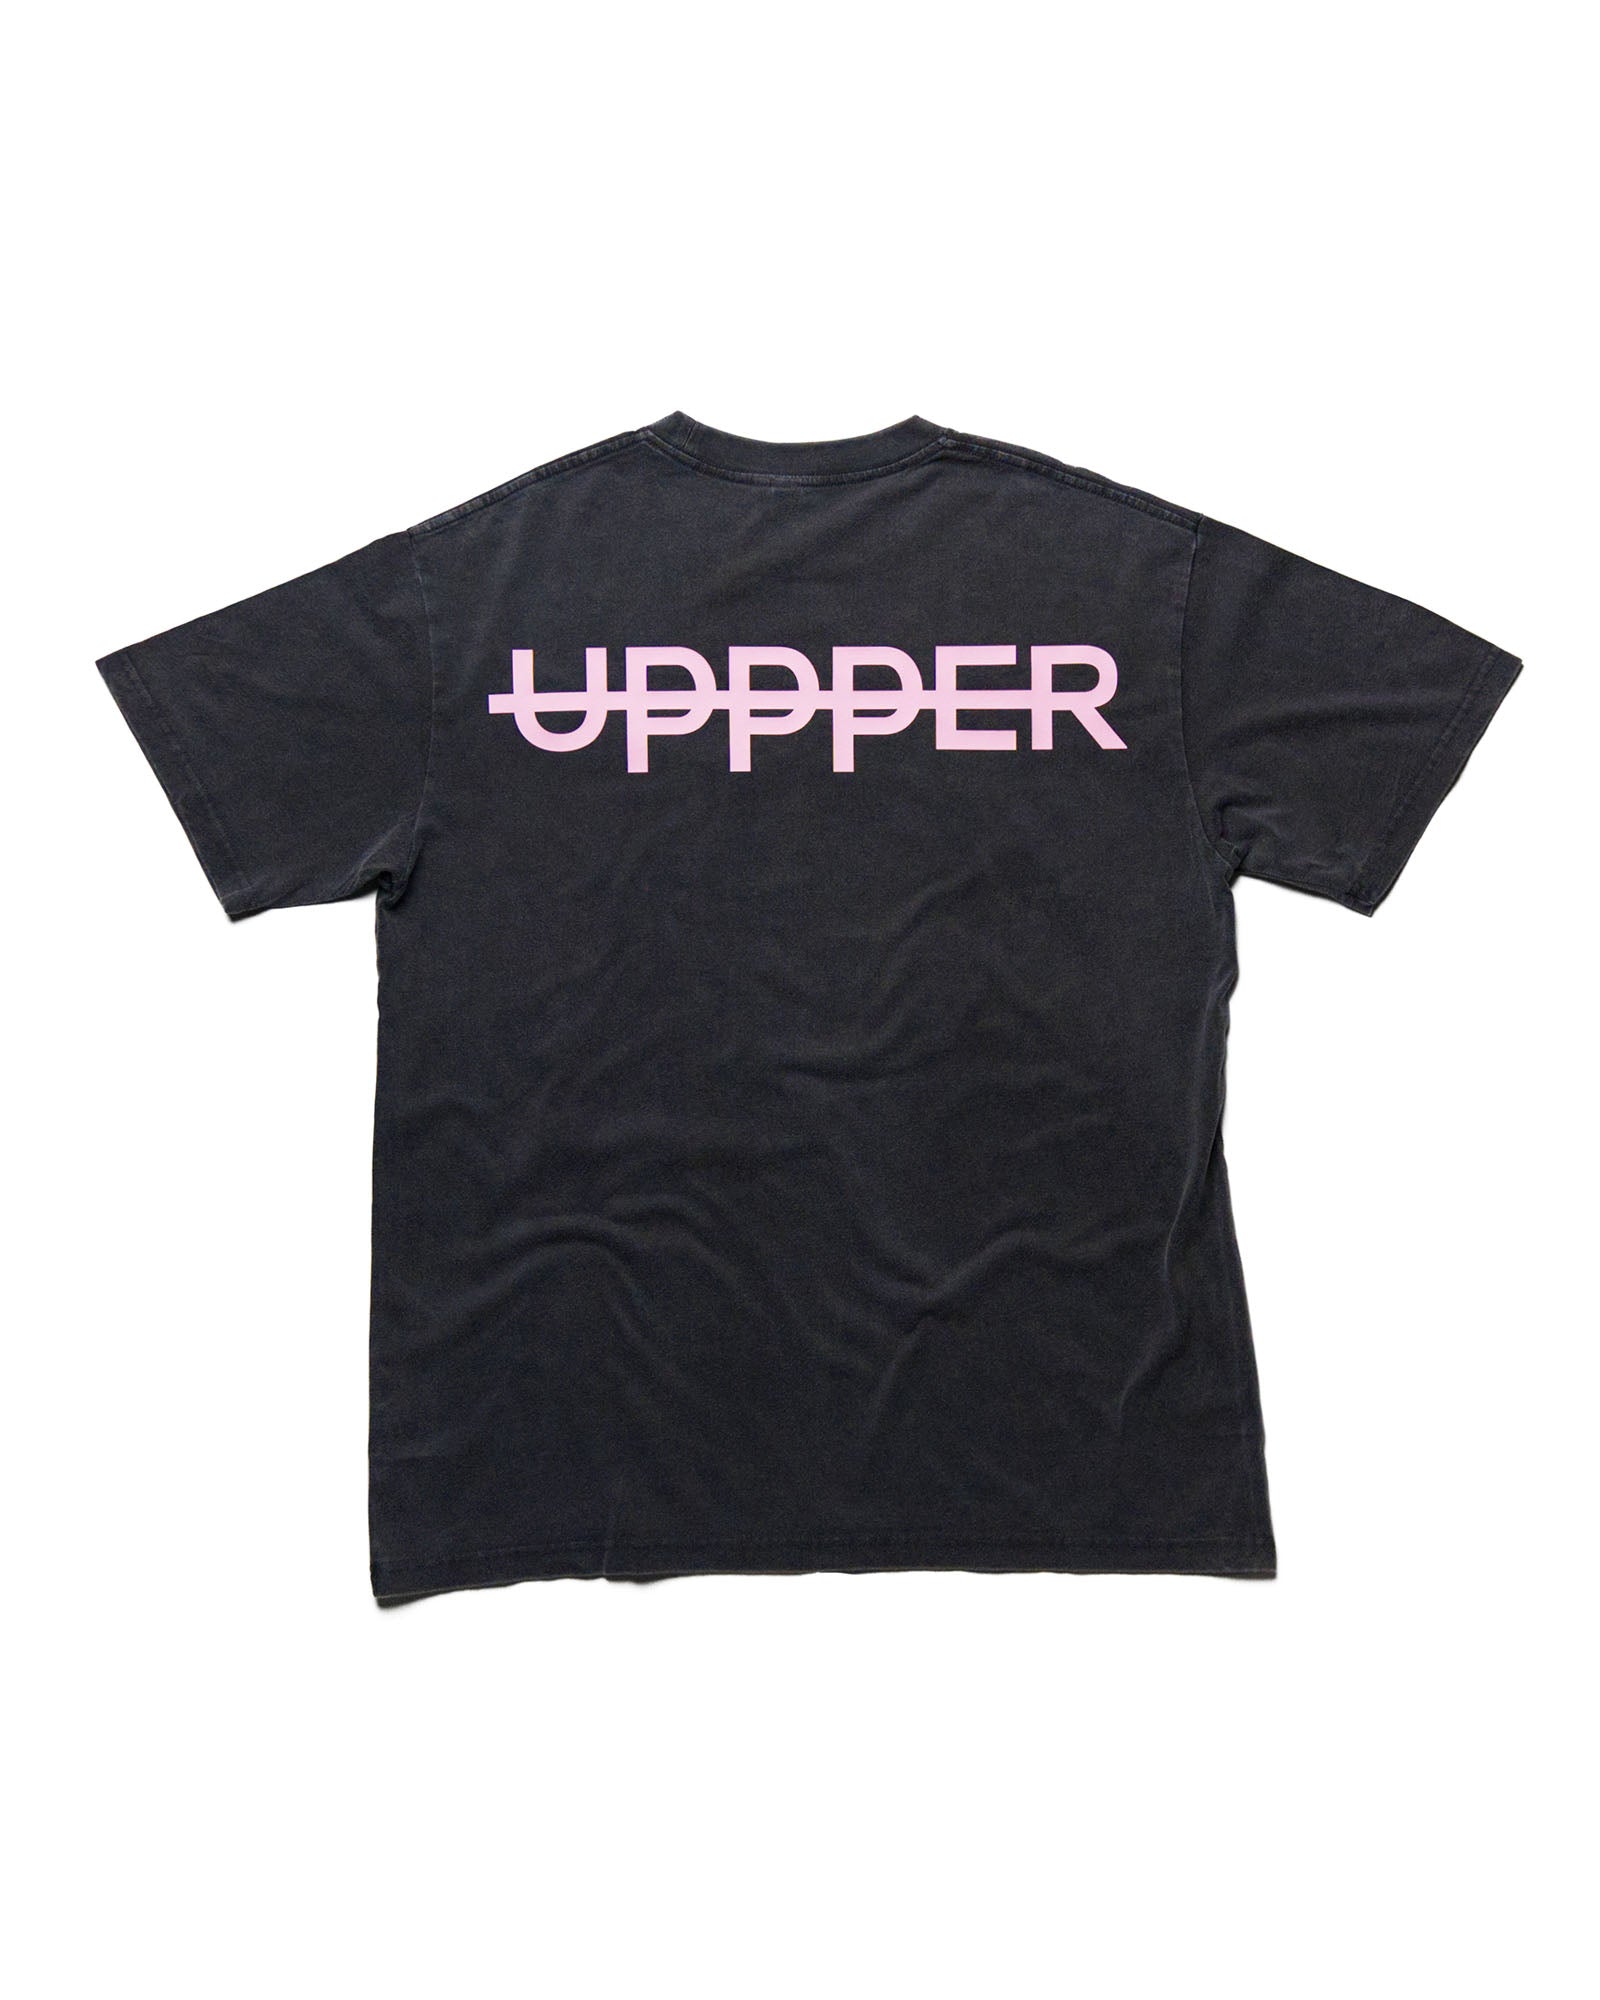 uppper core t-shirt washed black w/ pink logo